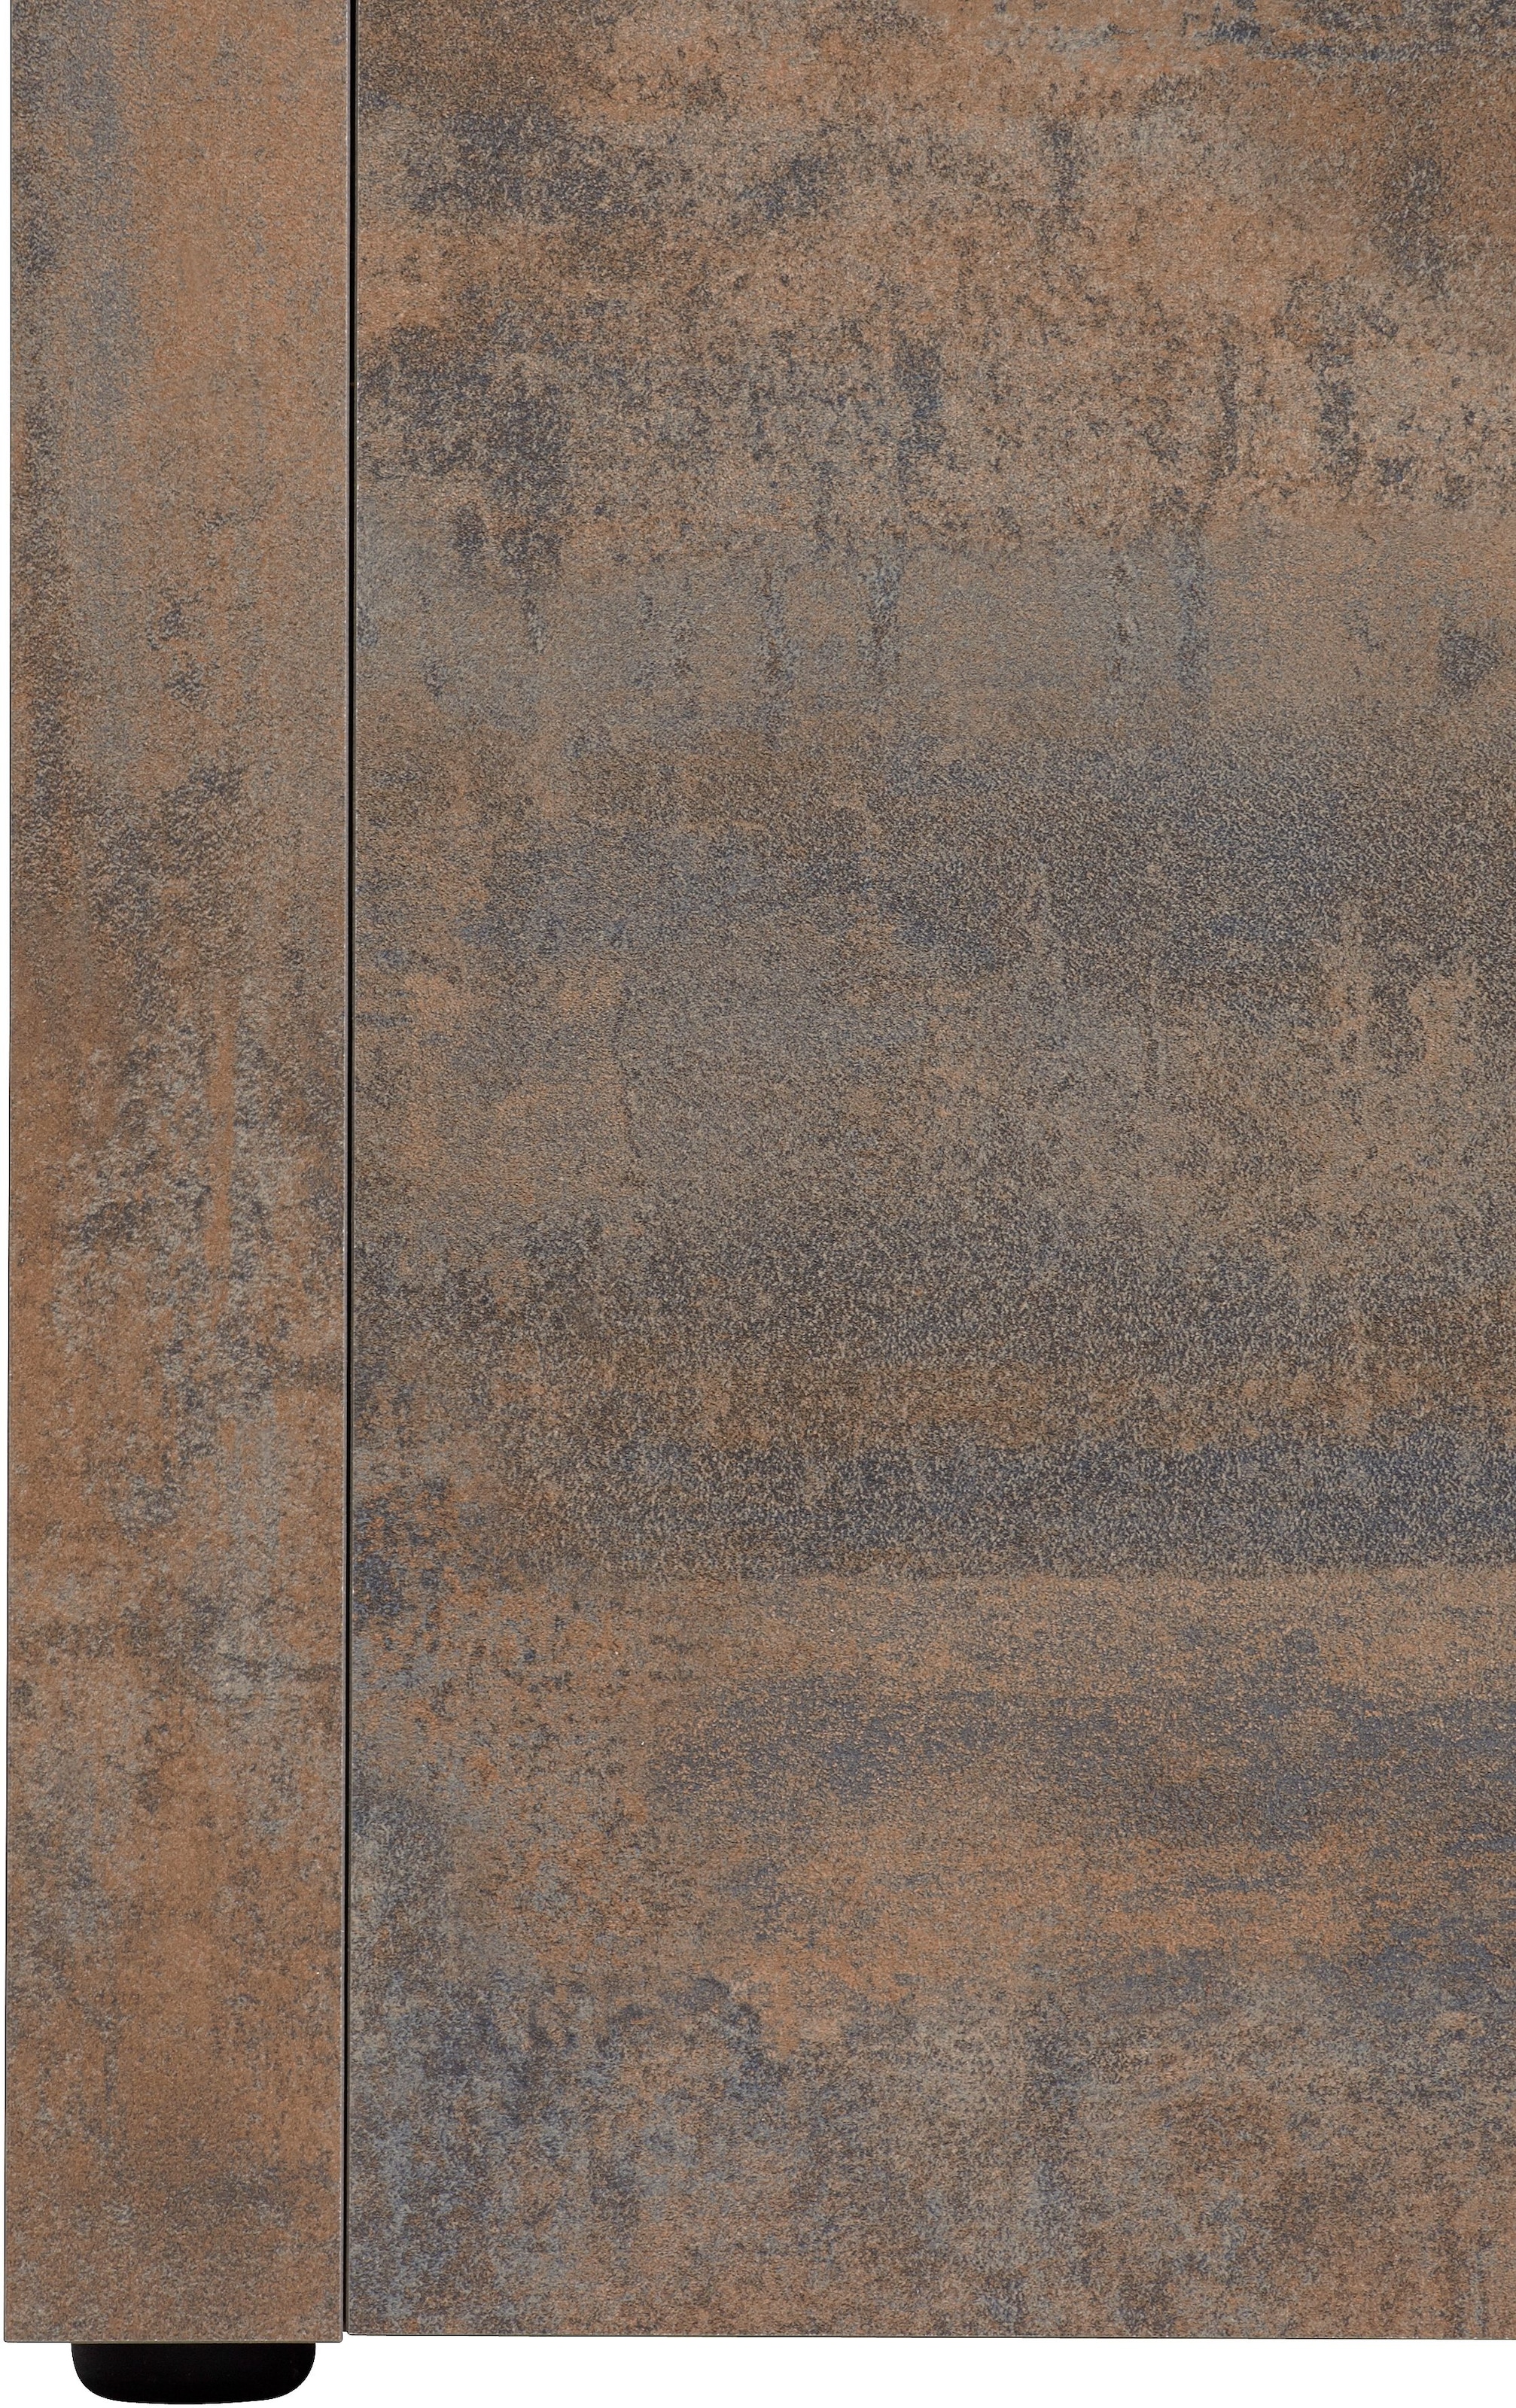 borchardt Möbel Sideboard »Santa Fe«, Breite 166 cm